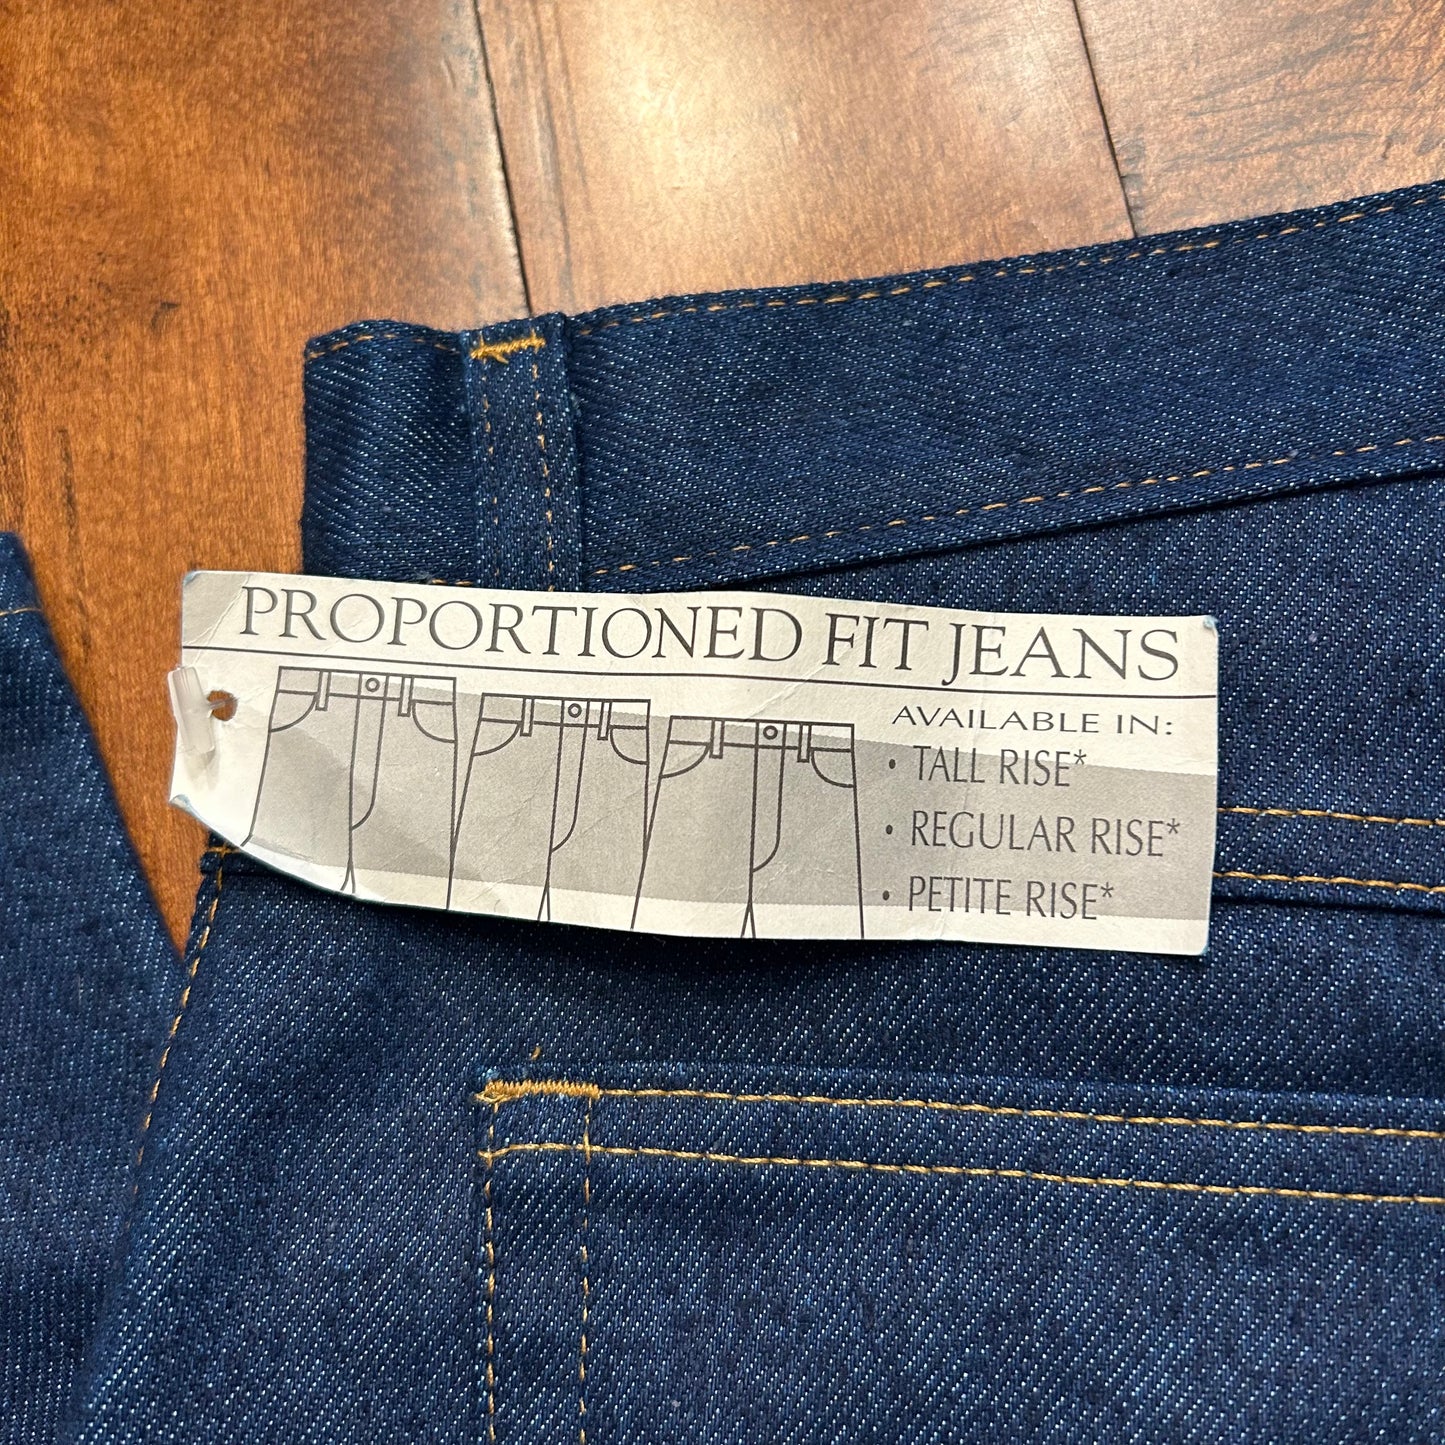 Vintage Sheplers NWT Jeans Size 31x31.5